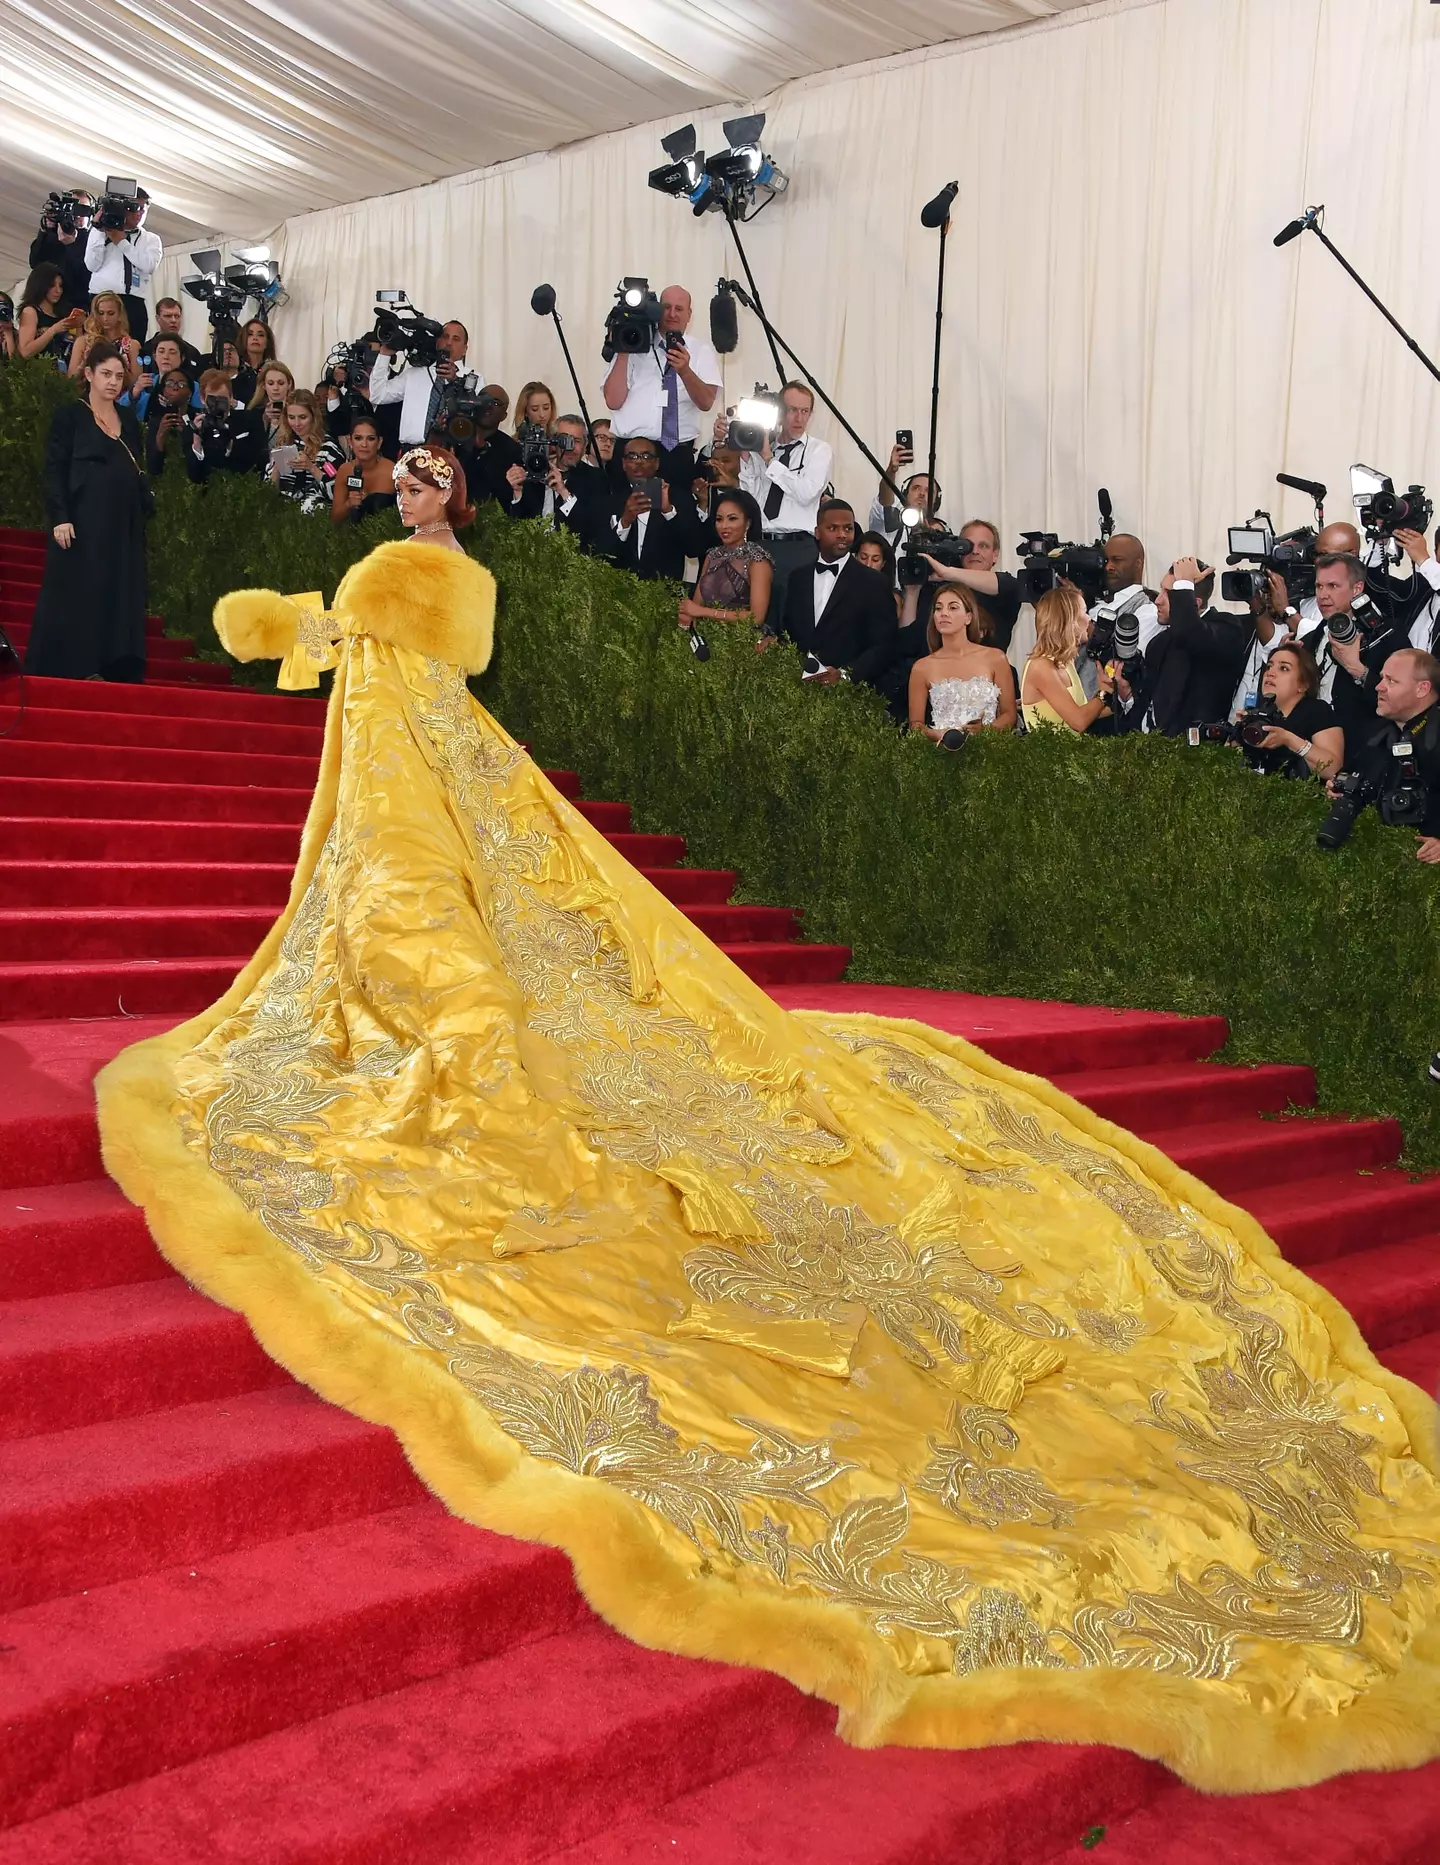 Rylan Clark's pizza look was inspired by Rihanna's 2015 Met Gala dress.